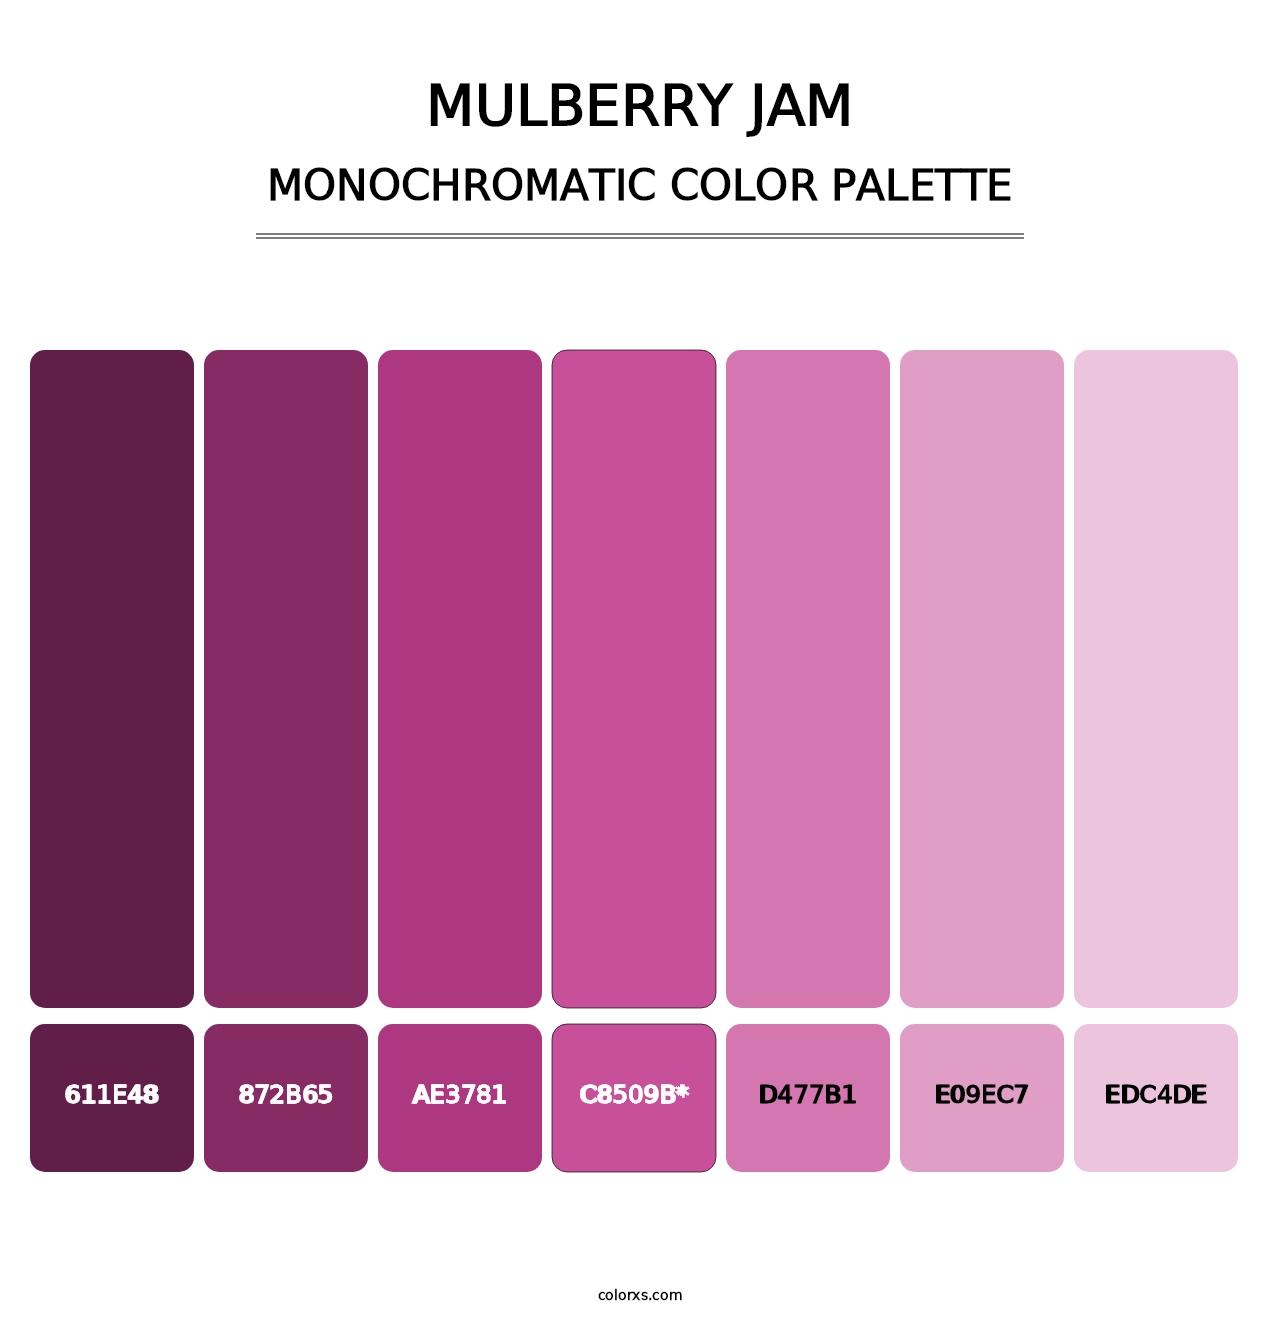 Mulberry Jam - Monochromatic Color Palette